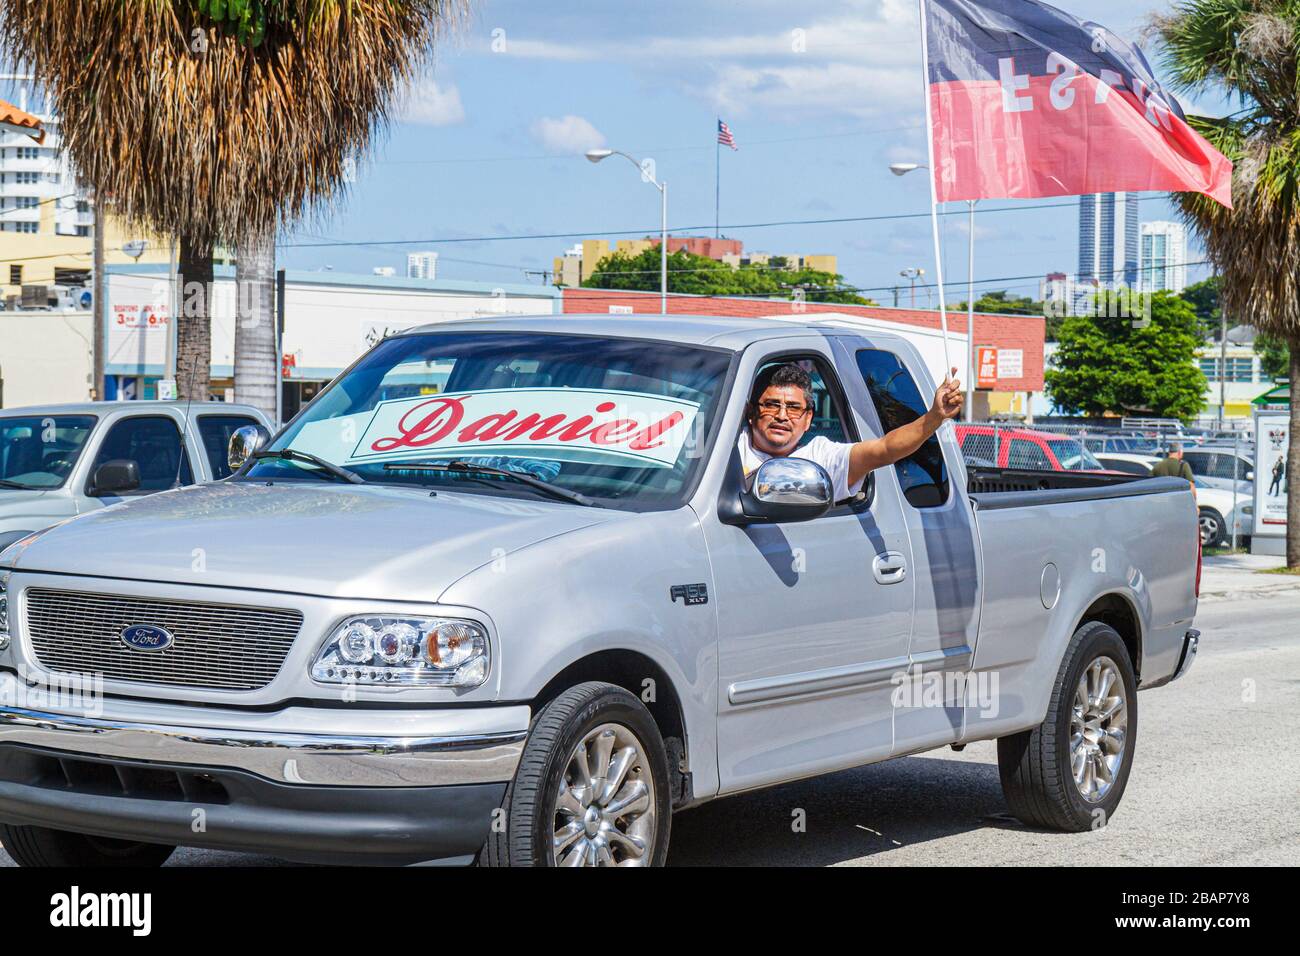 Miami Florida,Flagler Street,near Consulate General of Nicaragua,demonstration,Spanish language,bilingual,pro Nicaraguan police Daniel Ortega,Hispanic Stock Photo